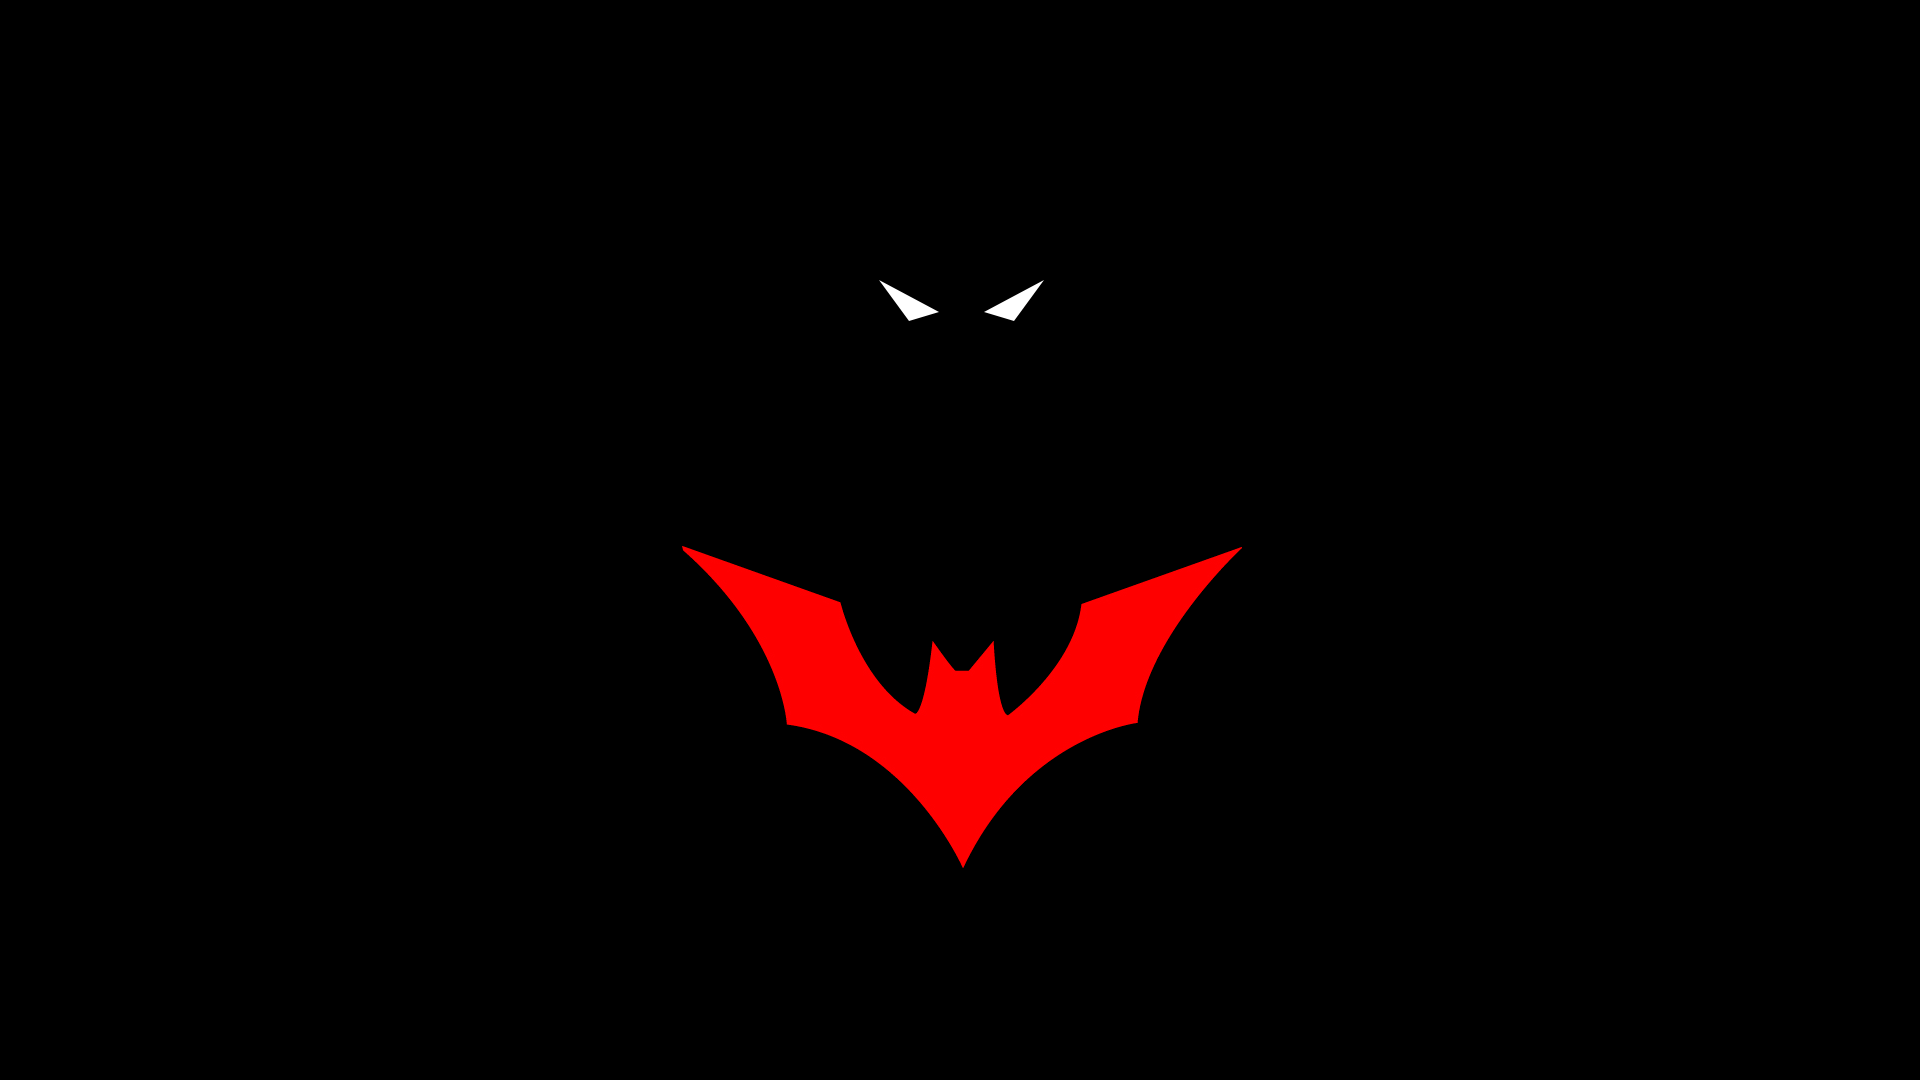 Red Bat Symbol On Logo - batman logo wallpaper - Google Search | #Super_heros